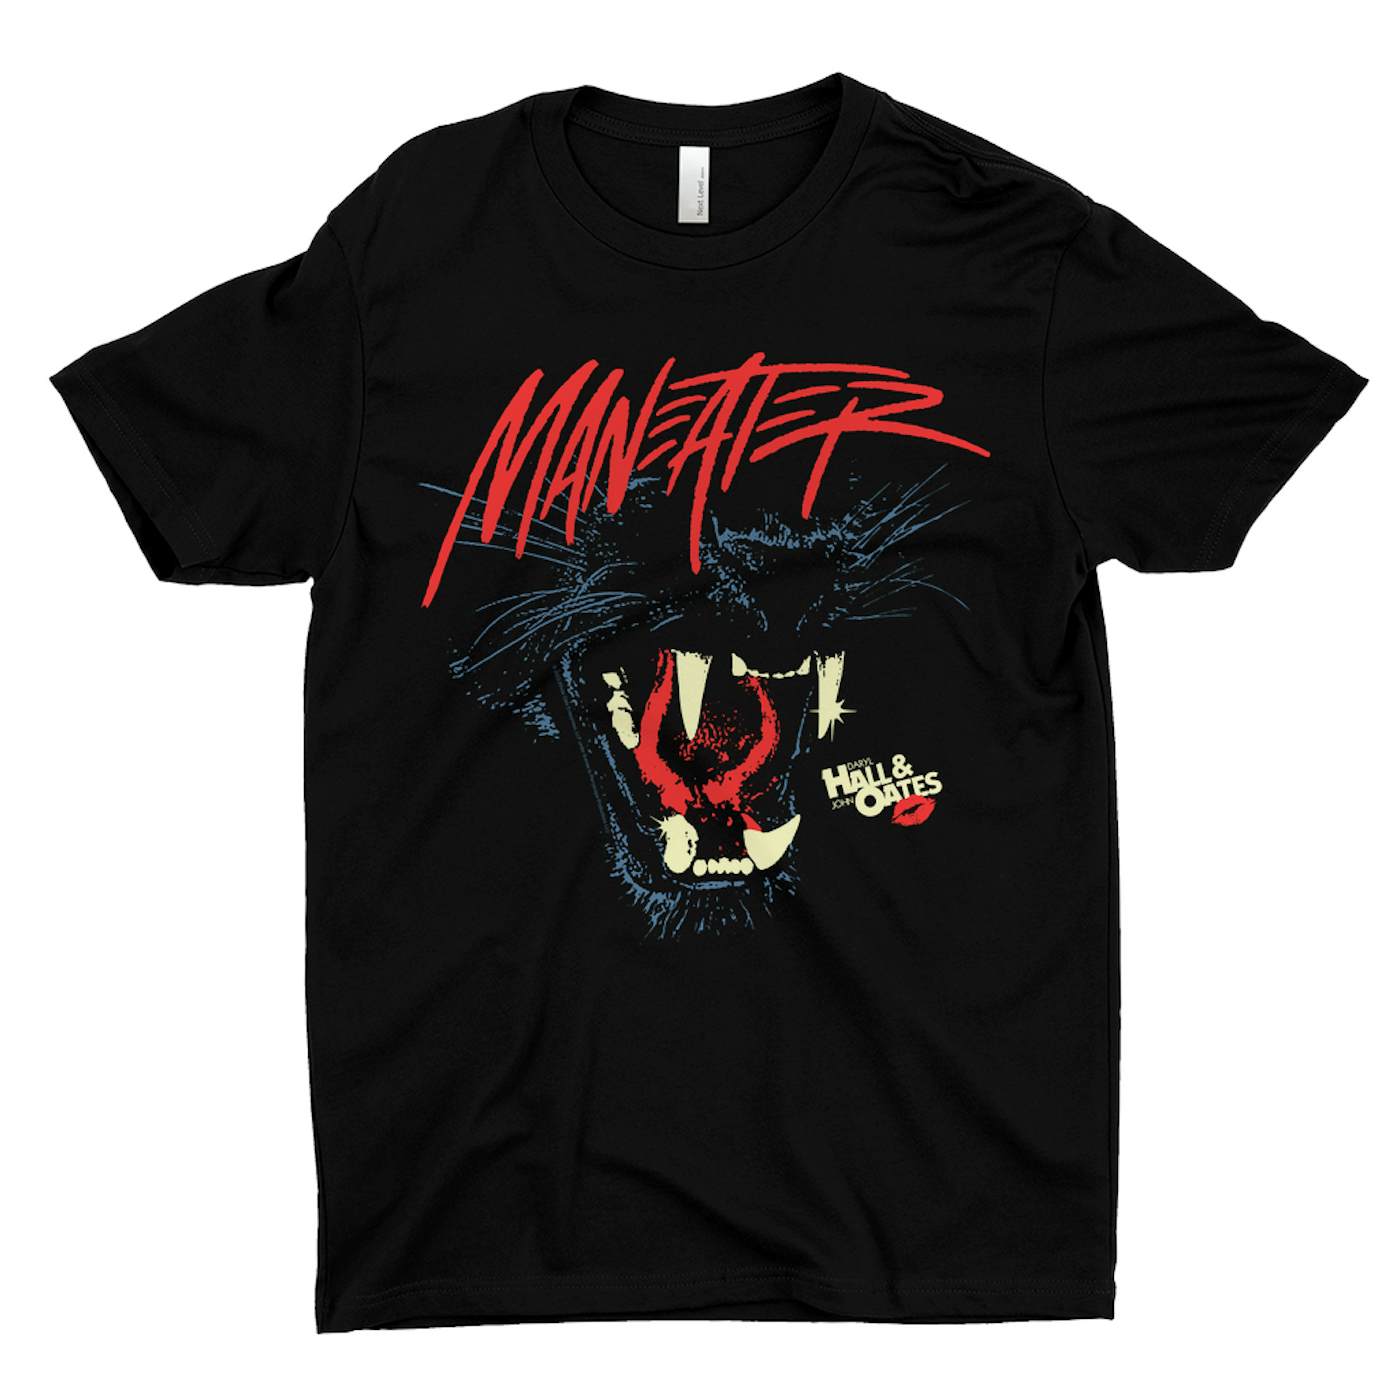 Daryl Hall & John Oates T-Shirt | Maneater Hall & Oates Shirt